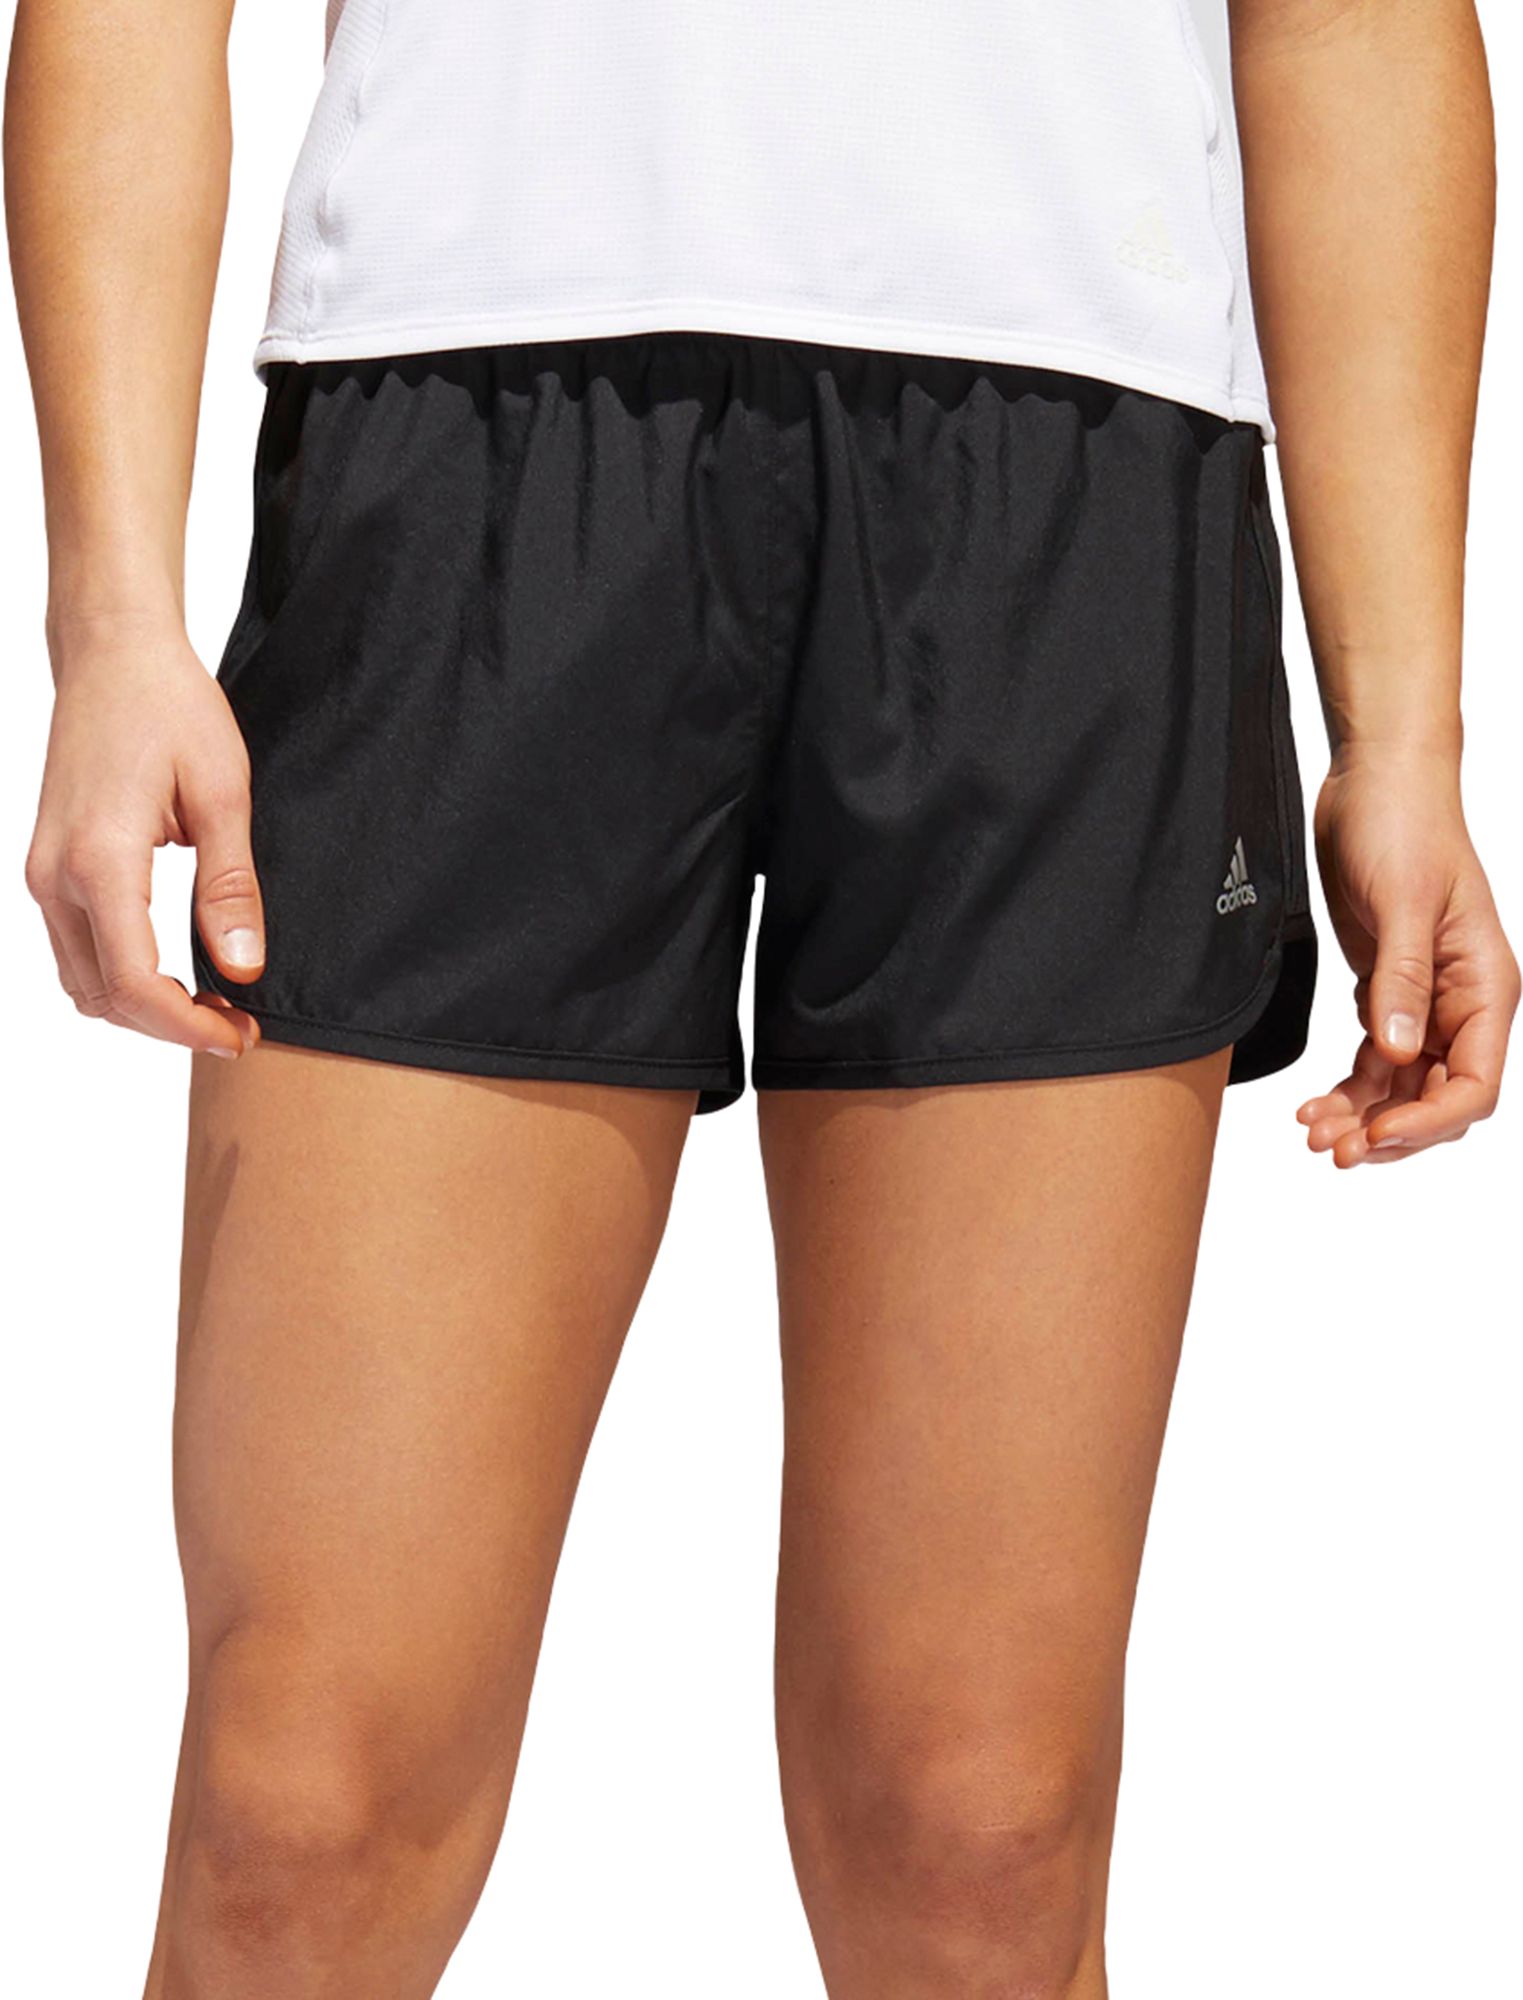 adidas board shorts womens